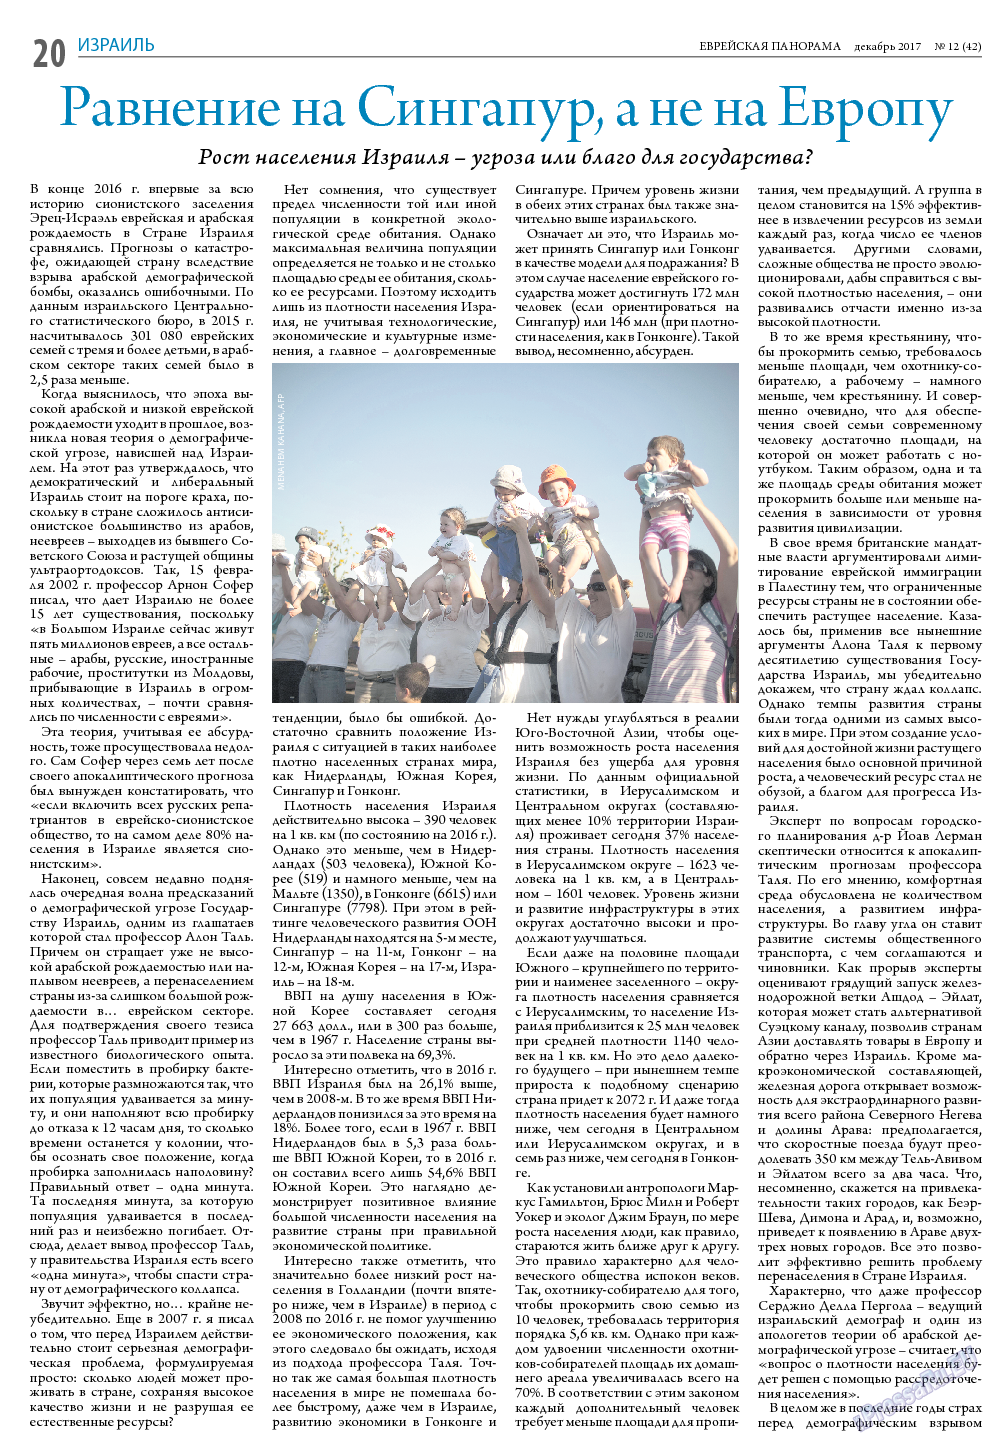 Еврейская панорама, газета. 2017 №12 стр.20